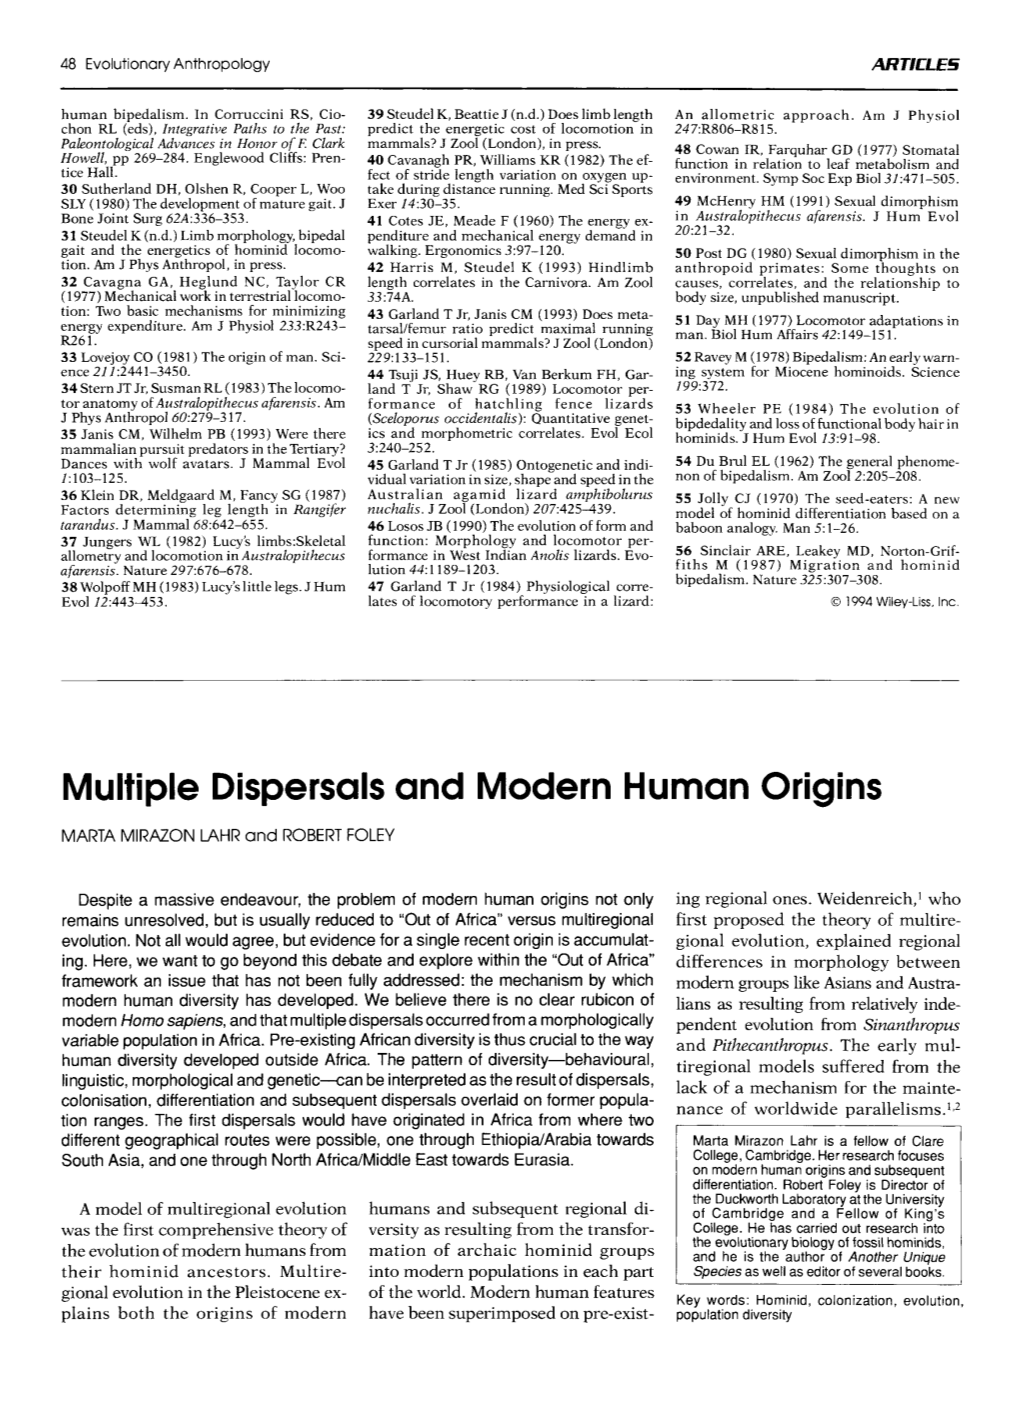 Multiple Dispersals and Modern Human Origins